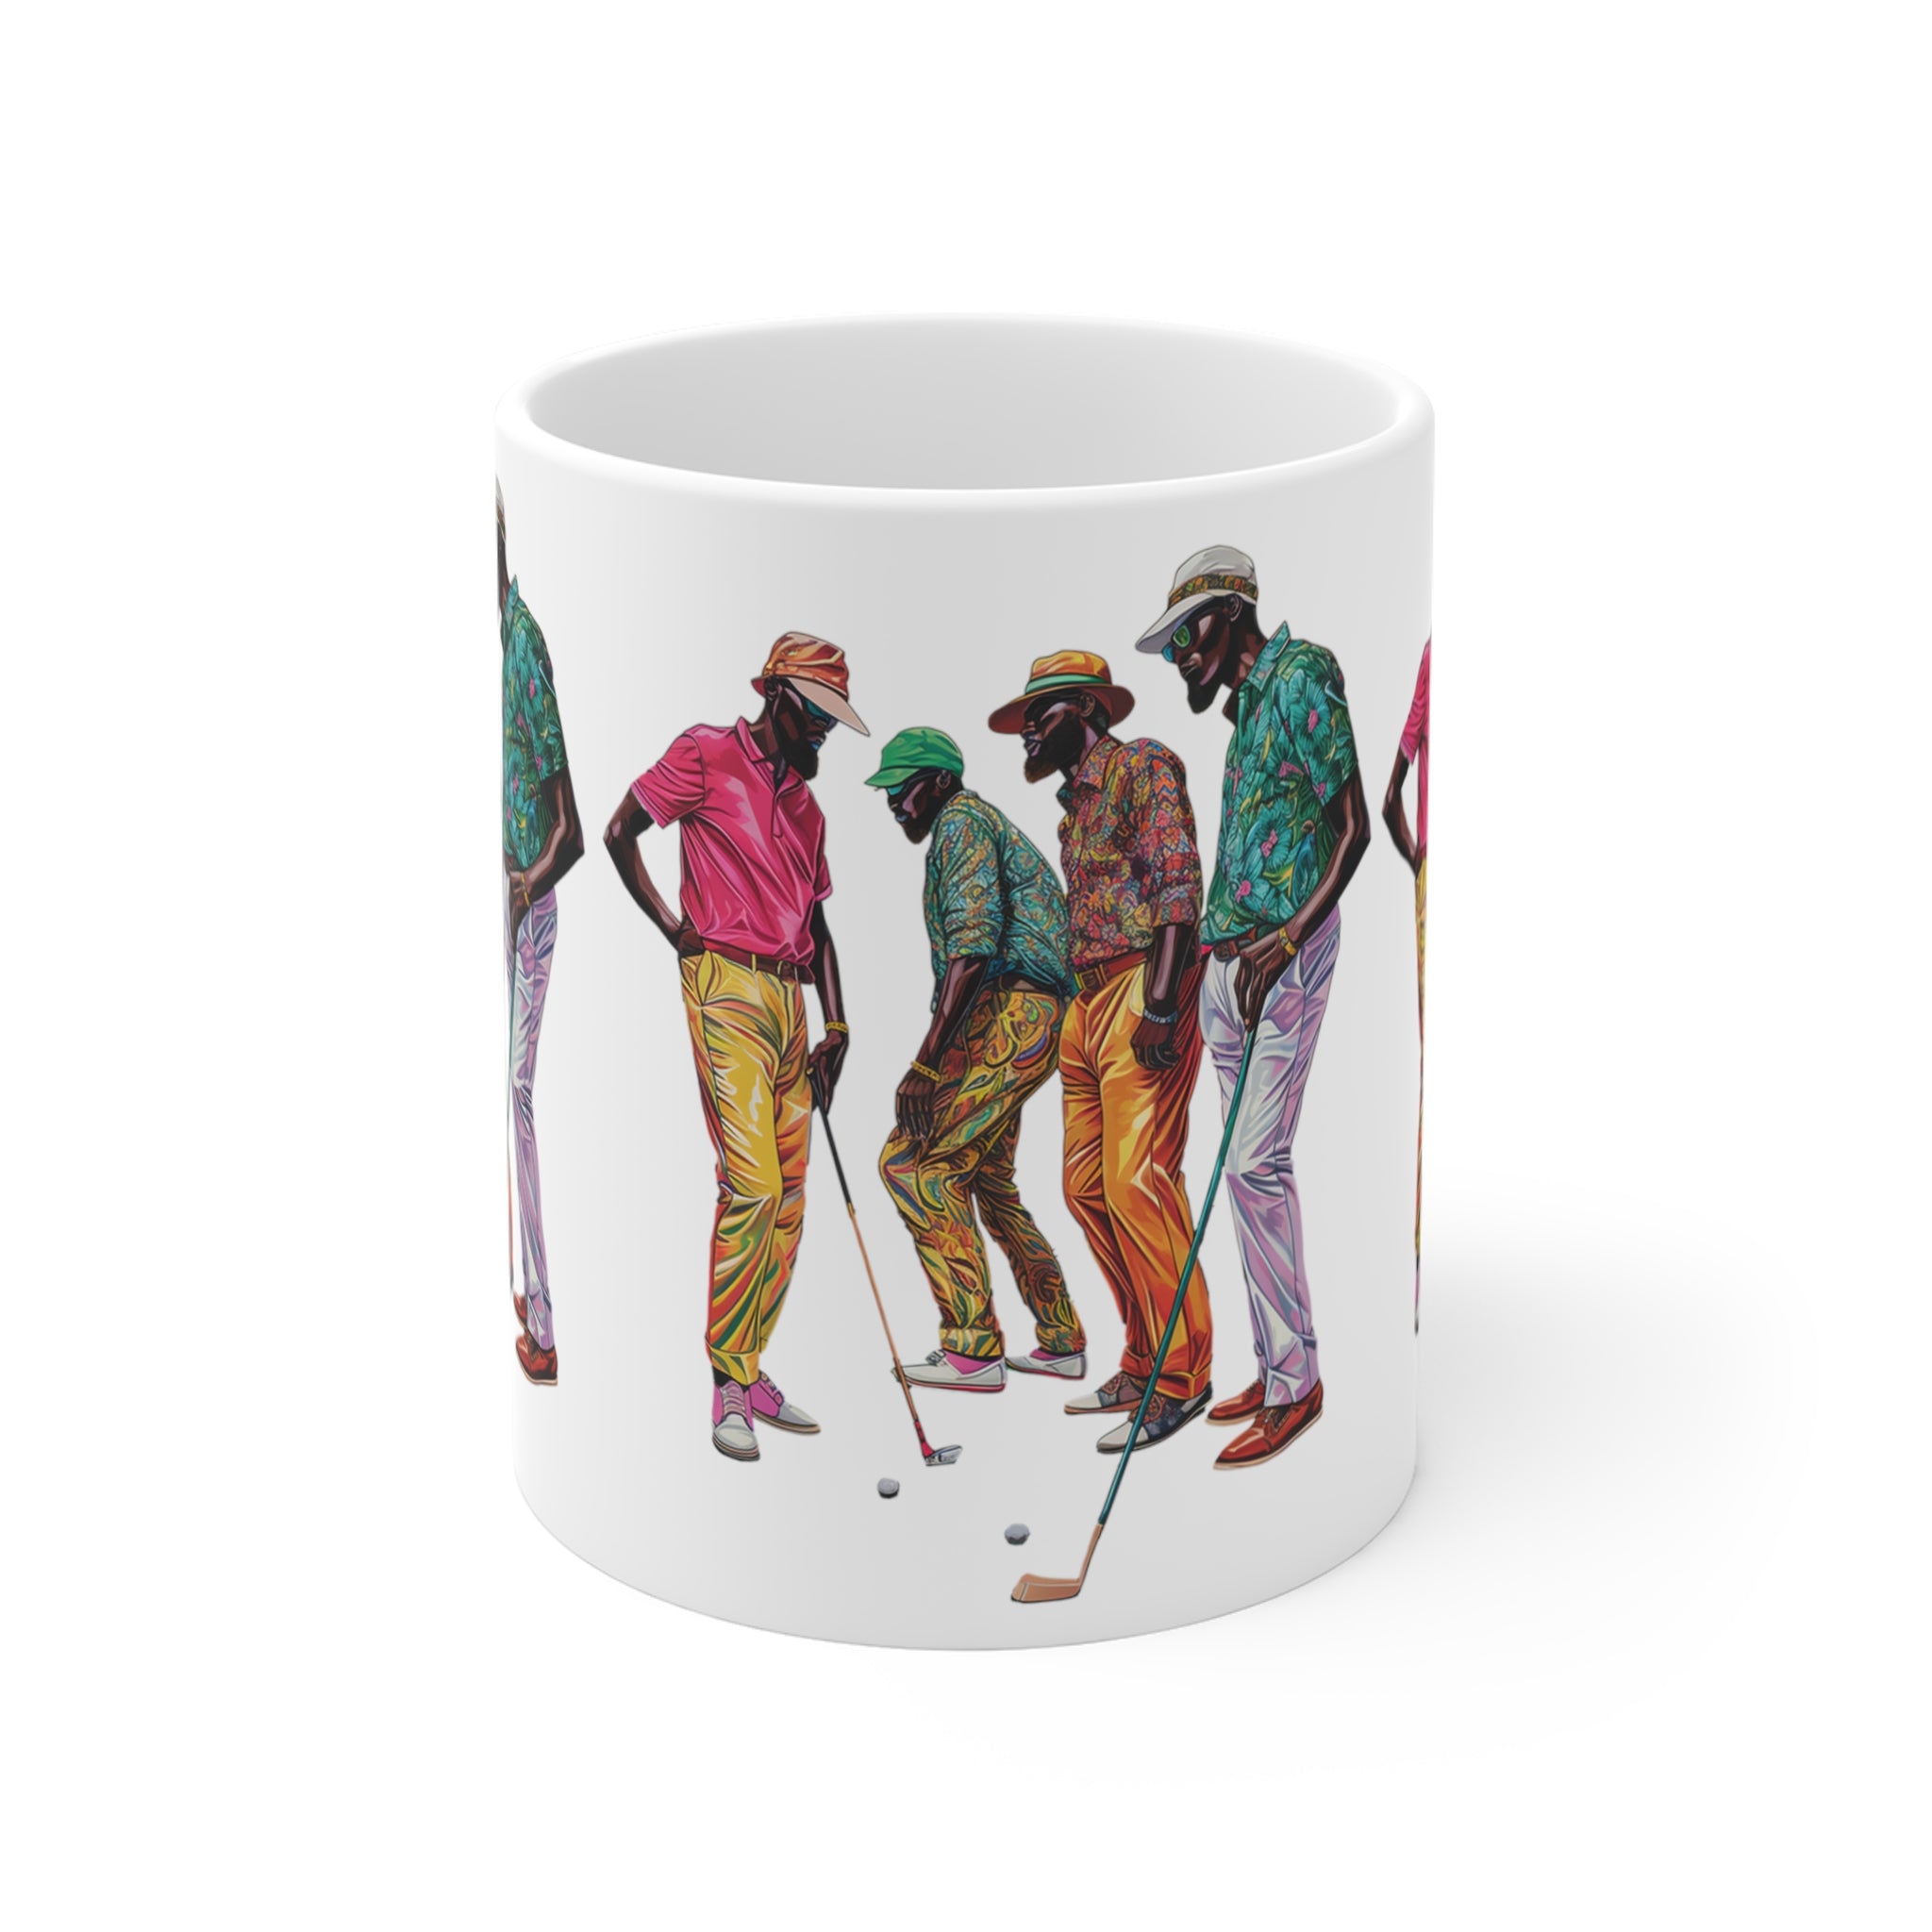 Black Men Golfers Mug - front view.